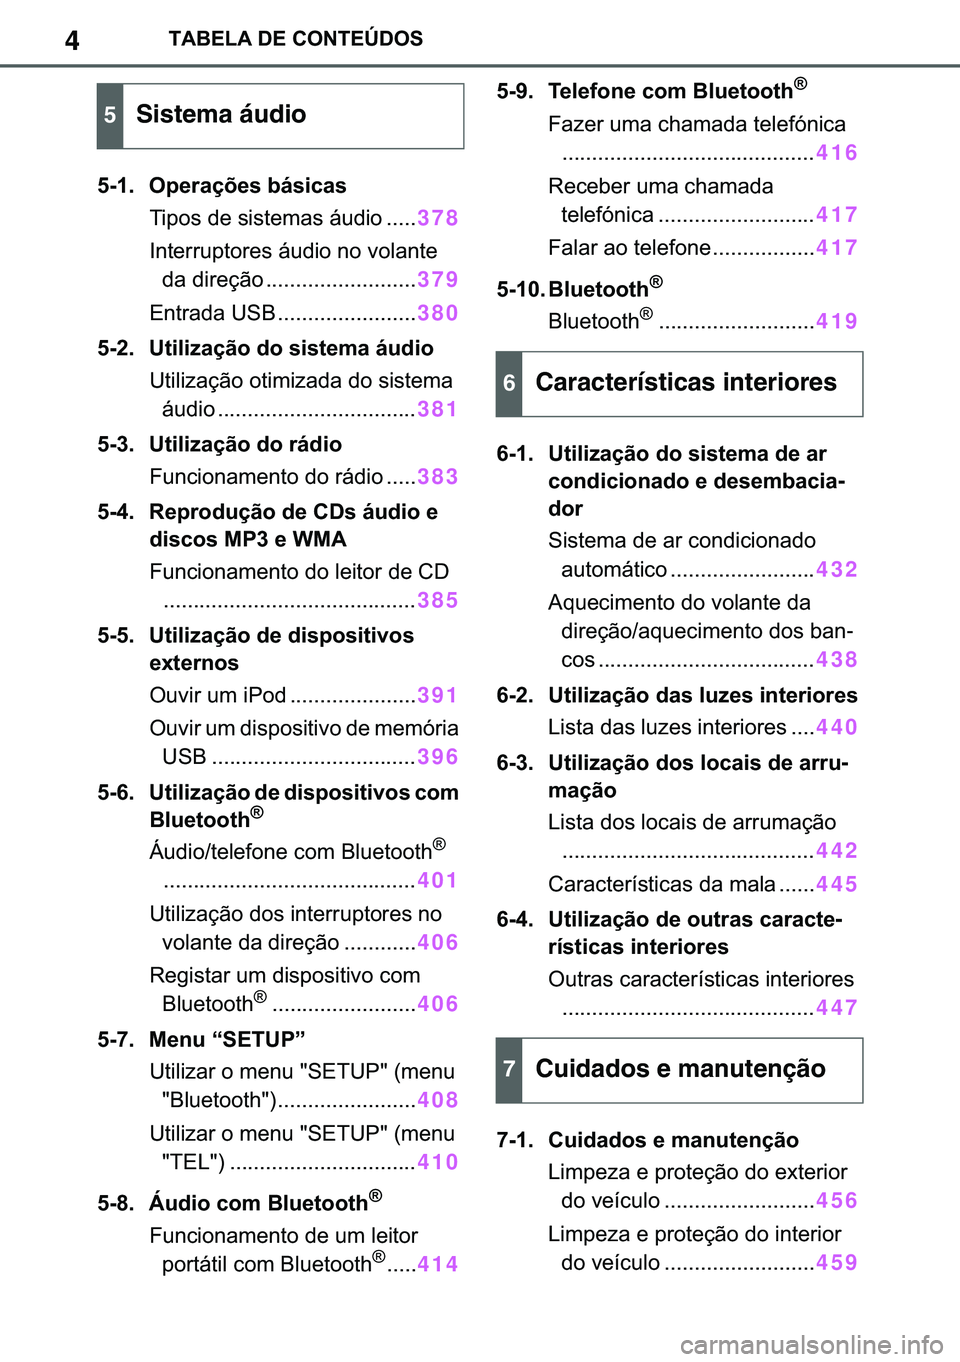 TOYOTA COROLLA 2020  Manual de utilização (in Portuguese) 4
�&�2�5�2�/�/�$ �+�9 �7�0�0�7 �(�(
�7�$�%�(�/�$���(��&�2�1�7�(�Ò��2�6
���� �2�S�H�U�D�o�}�H�V��E�i�V�L�F�D�V
�7�L�S�R�V��G�H��V�L�V�W�H�P�D�V��i�X�G�L�R �����378
�,�Q�W�H�U�U�X�S�W�